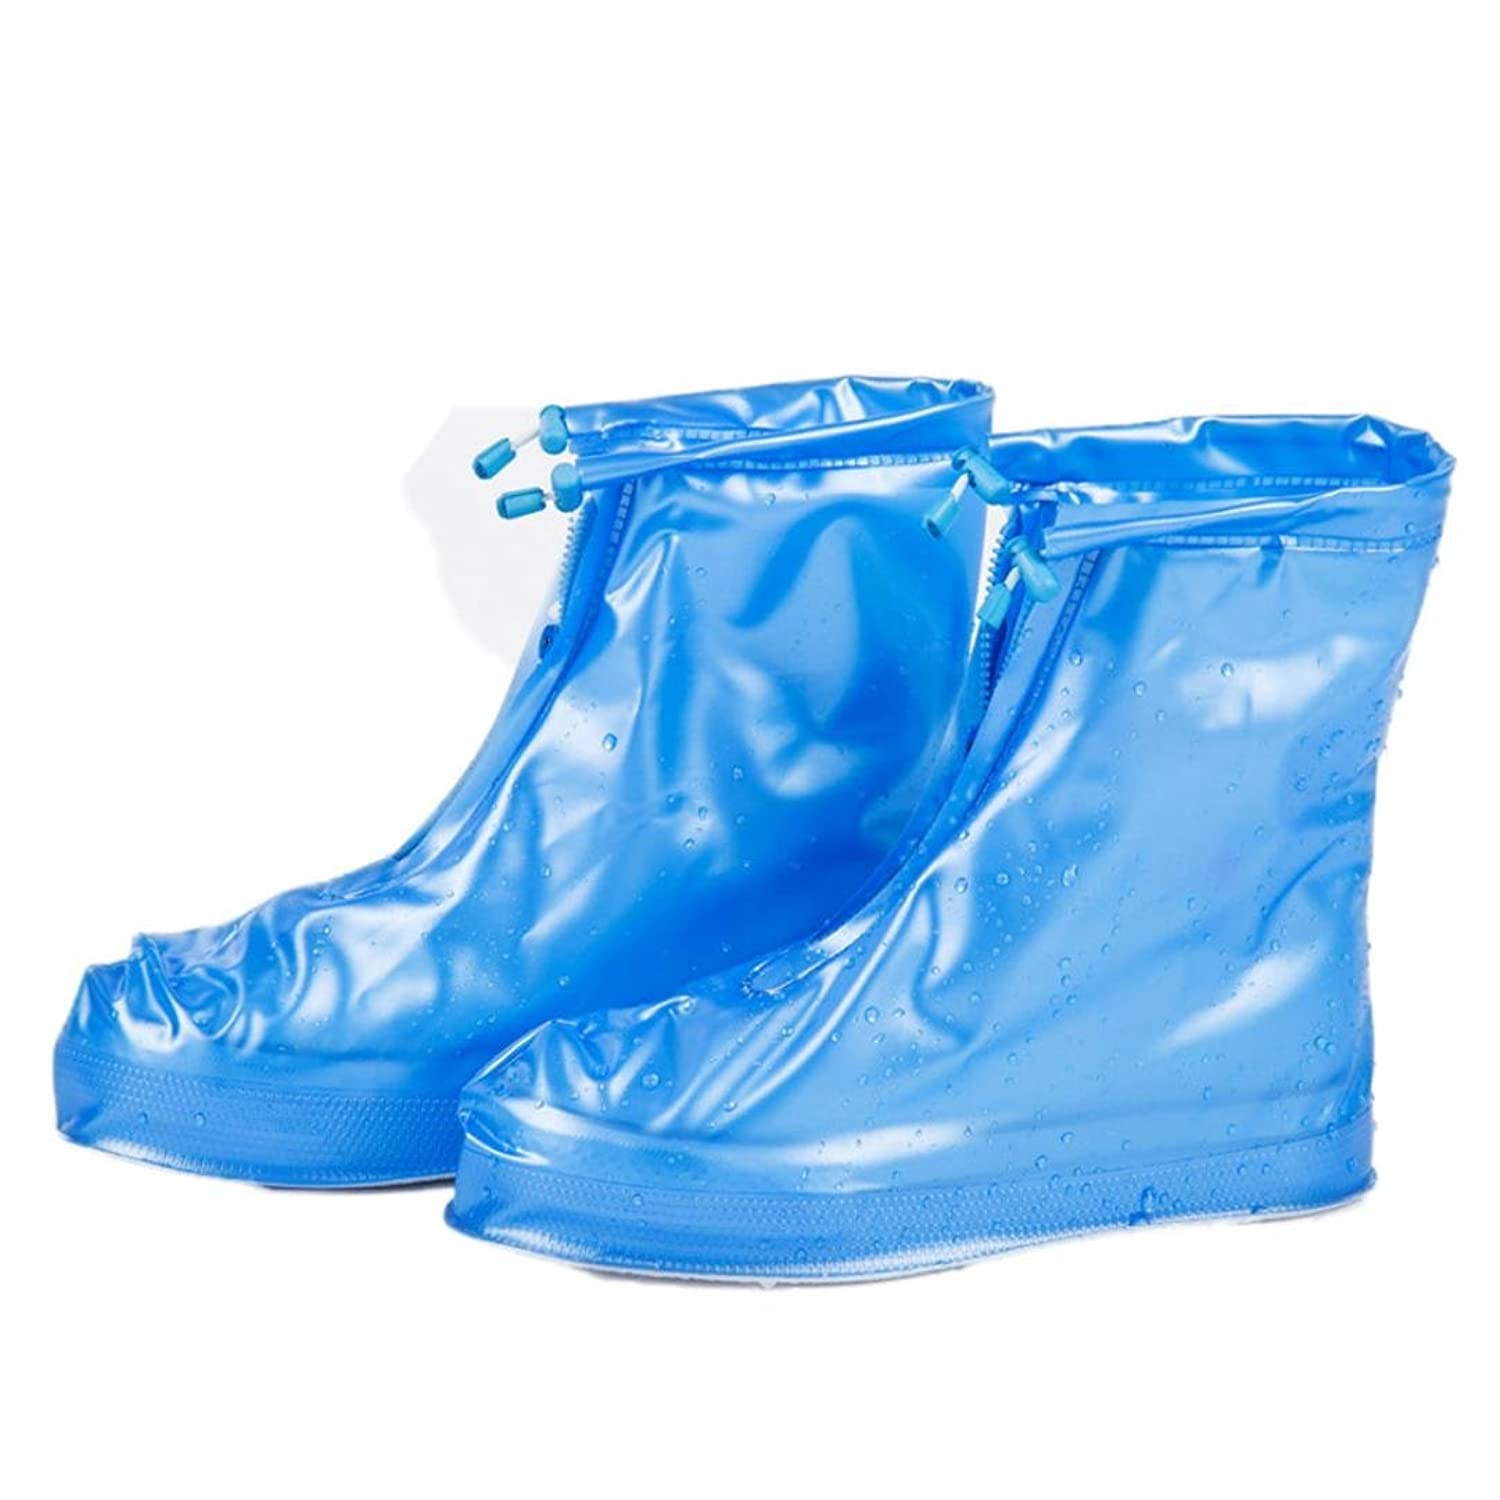 фото Галоши на обувь мужские xpx reusable shoe covers голубые 39-40 ru